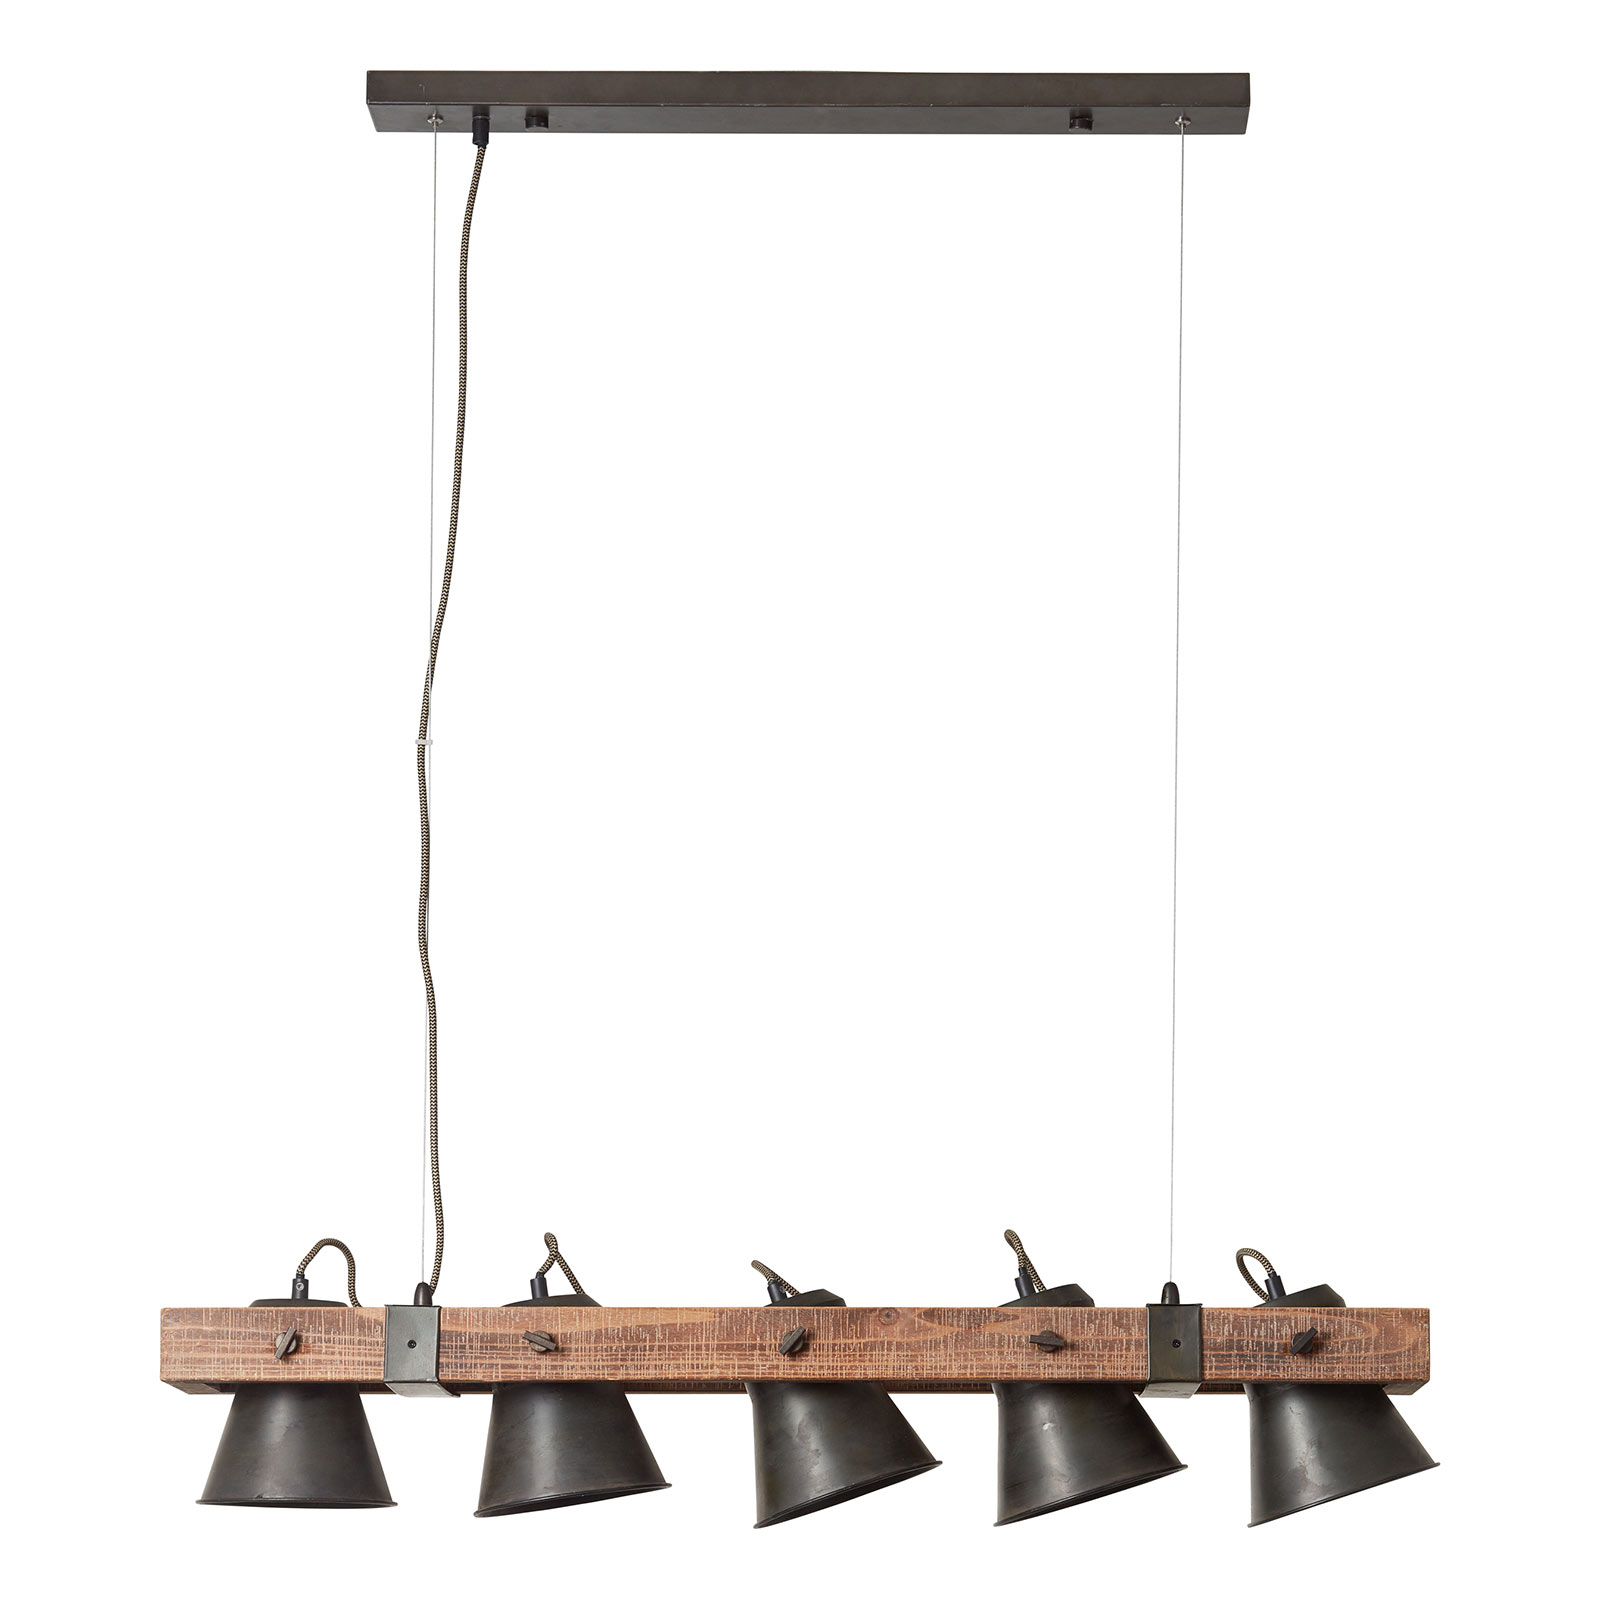 Hanglamp Plow 5-lamps, zwart/donker hout